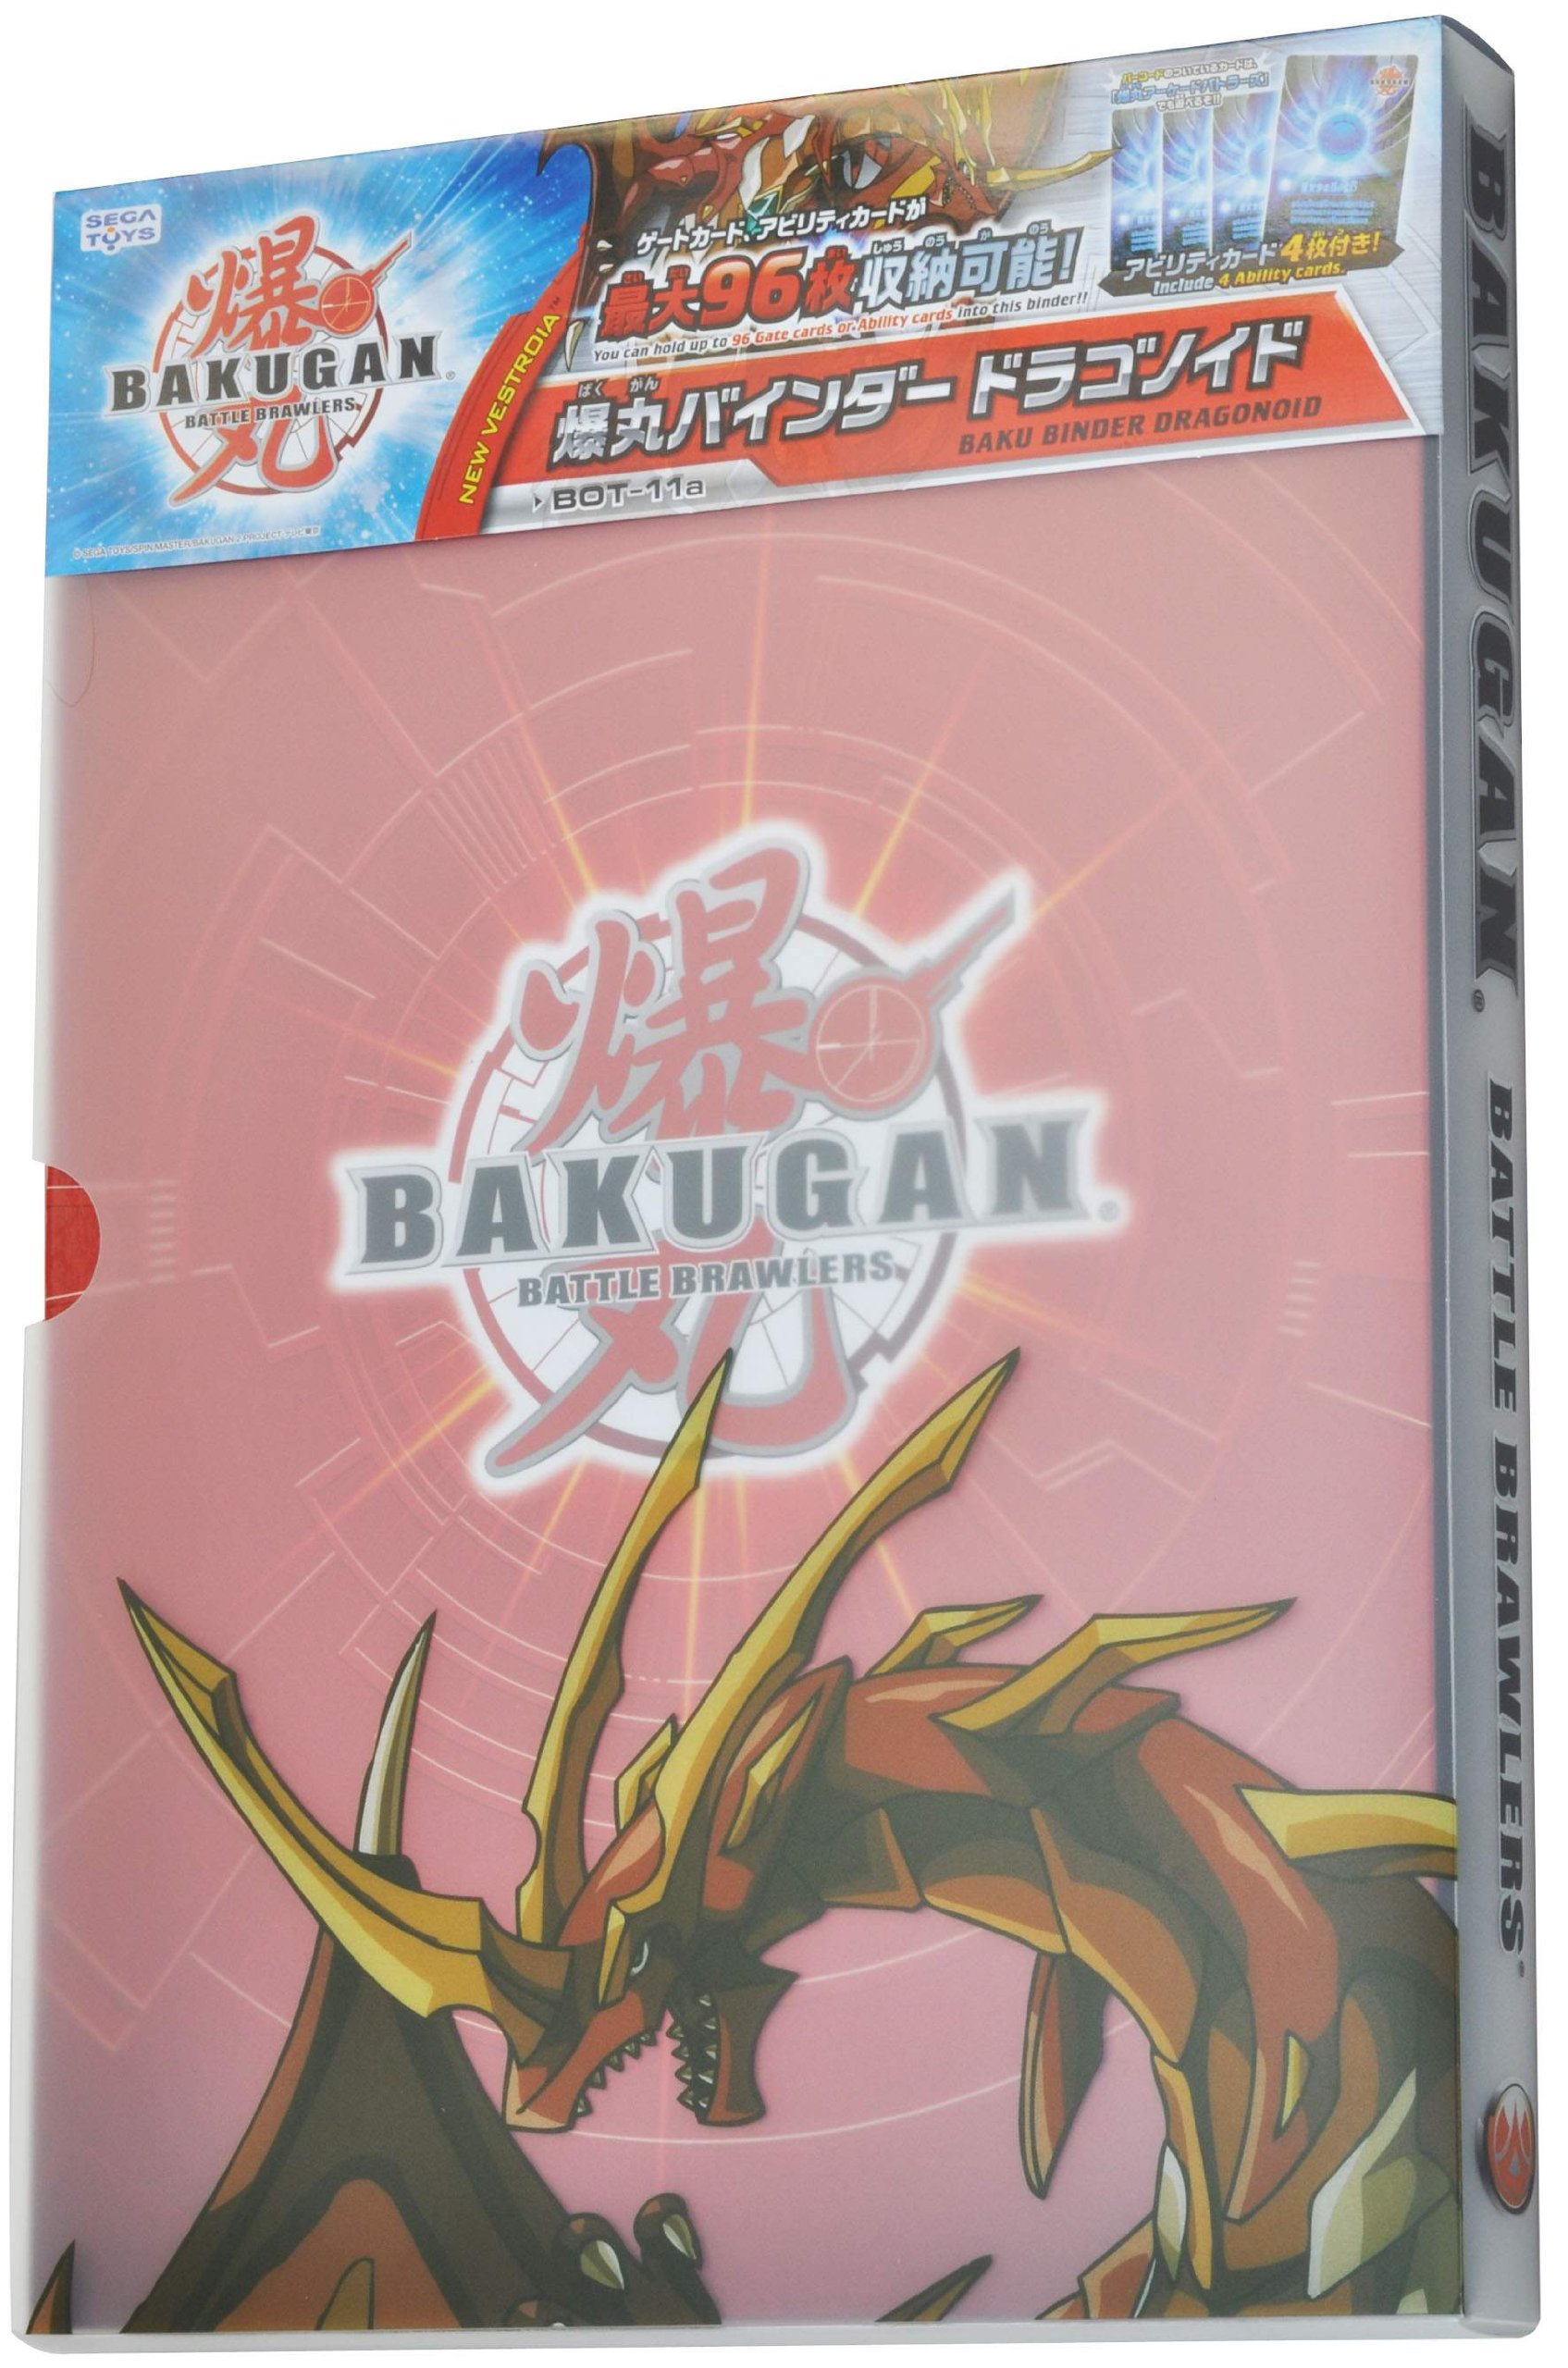 Bakugan BOT-11b Bakugan Binder Dragonoid